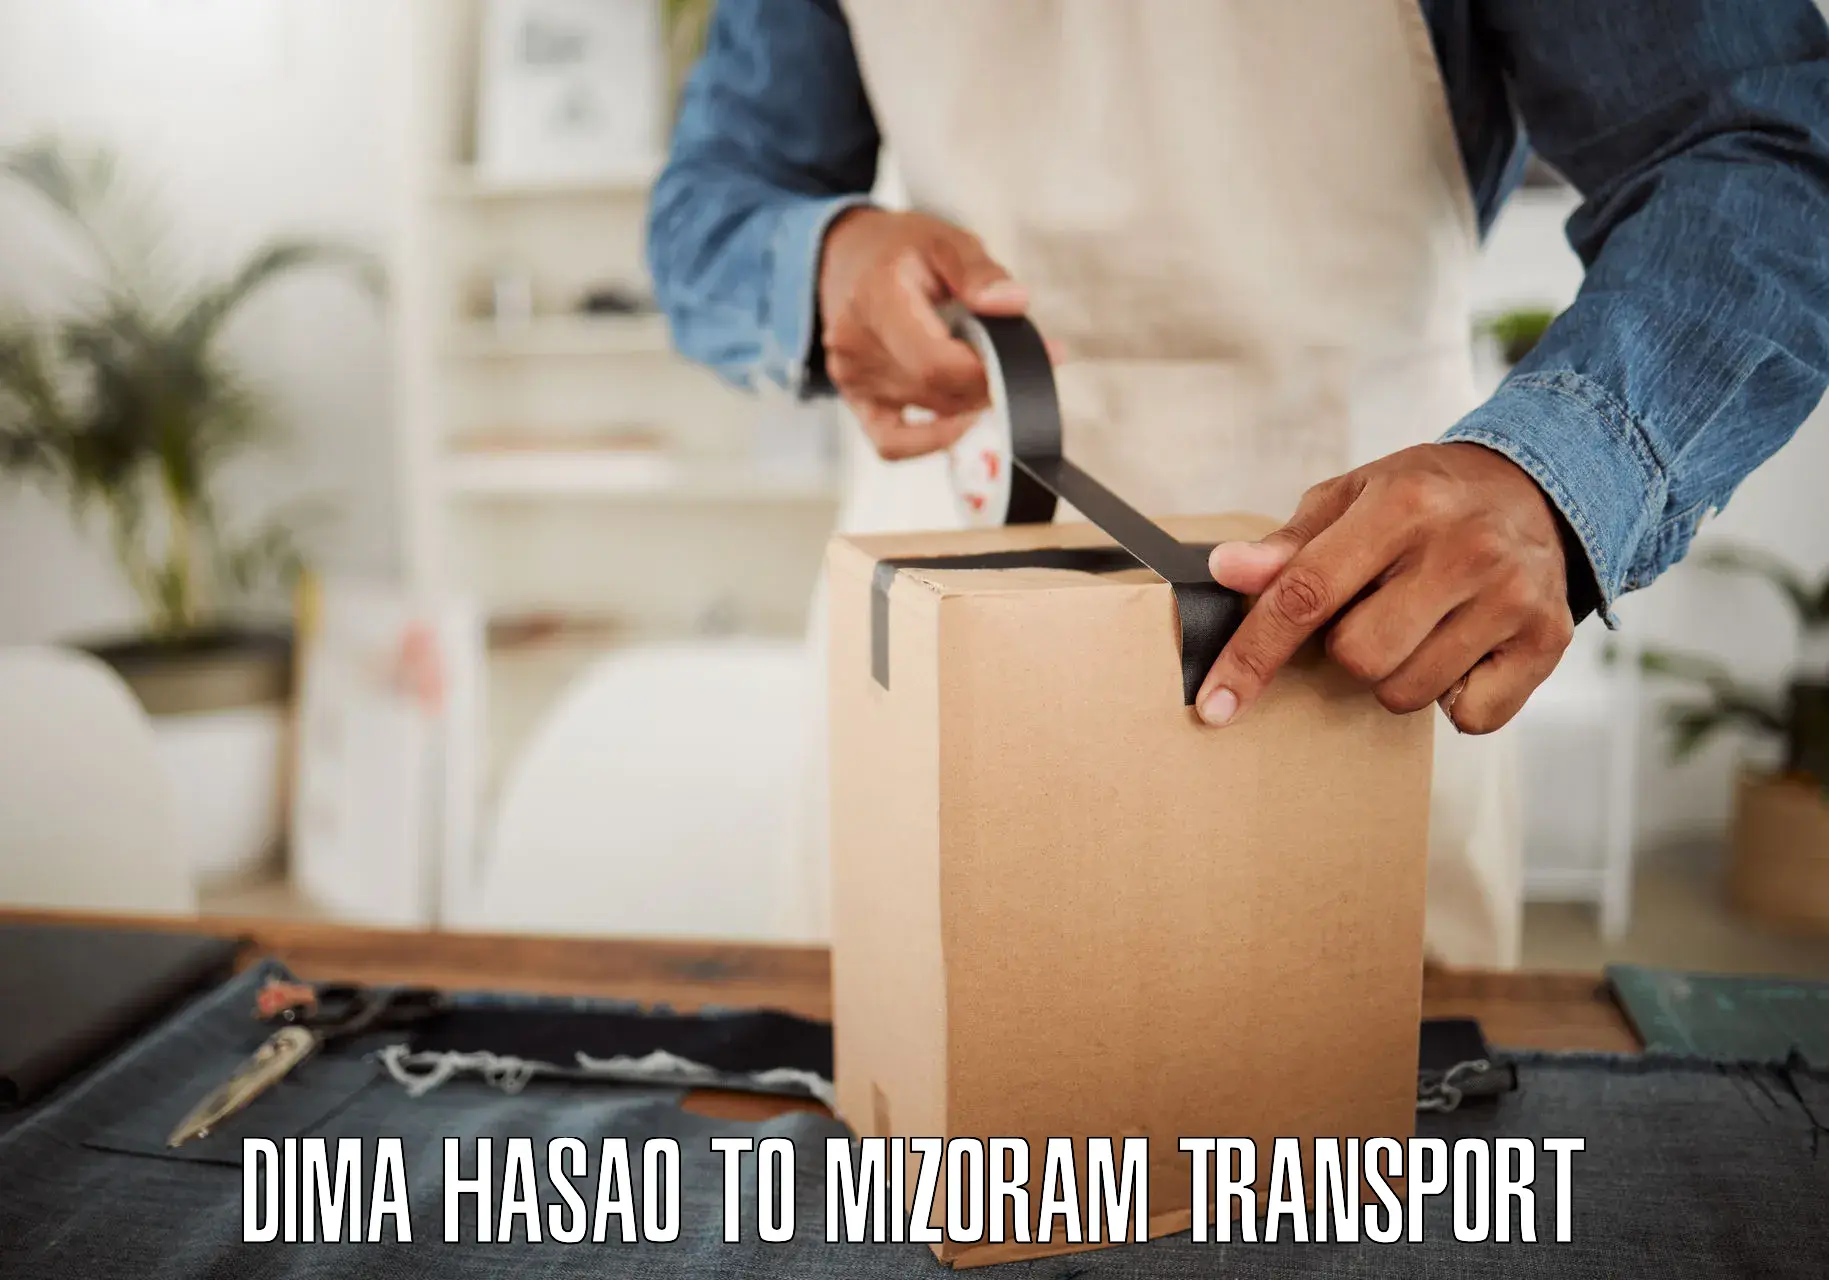 Transport in sharing in Dima Hasao to Mizoram